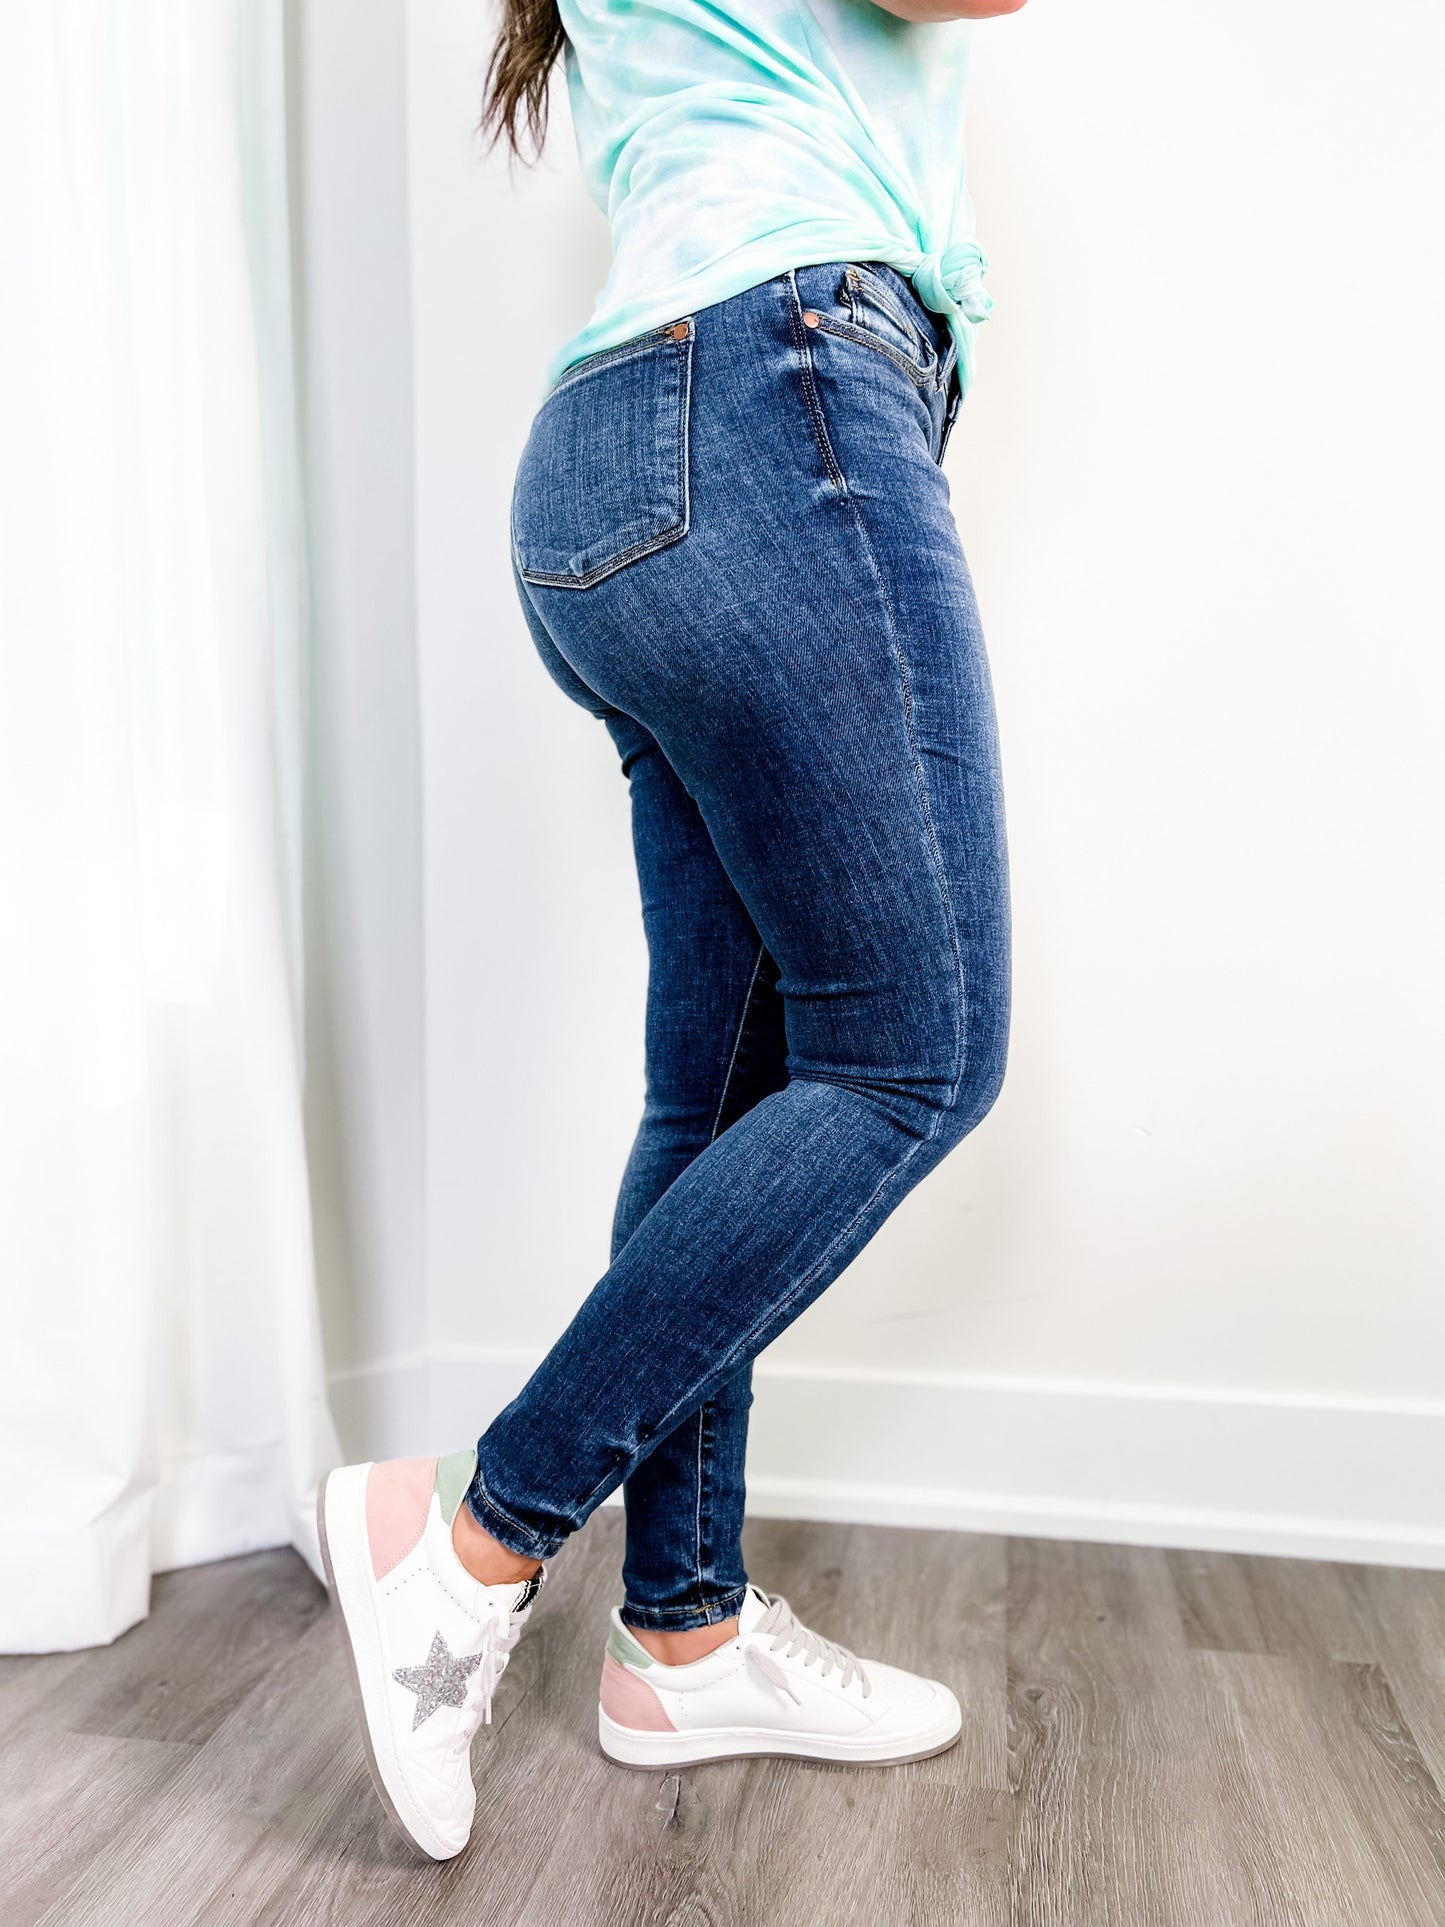 Judy Blue  8 Days A Week  Medium Wash Mid Rise Skinny jeans with Handsanding